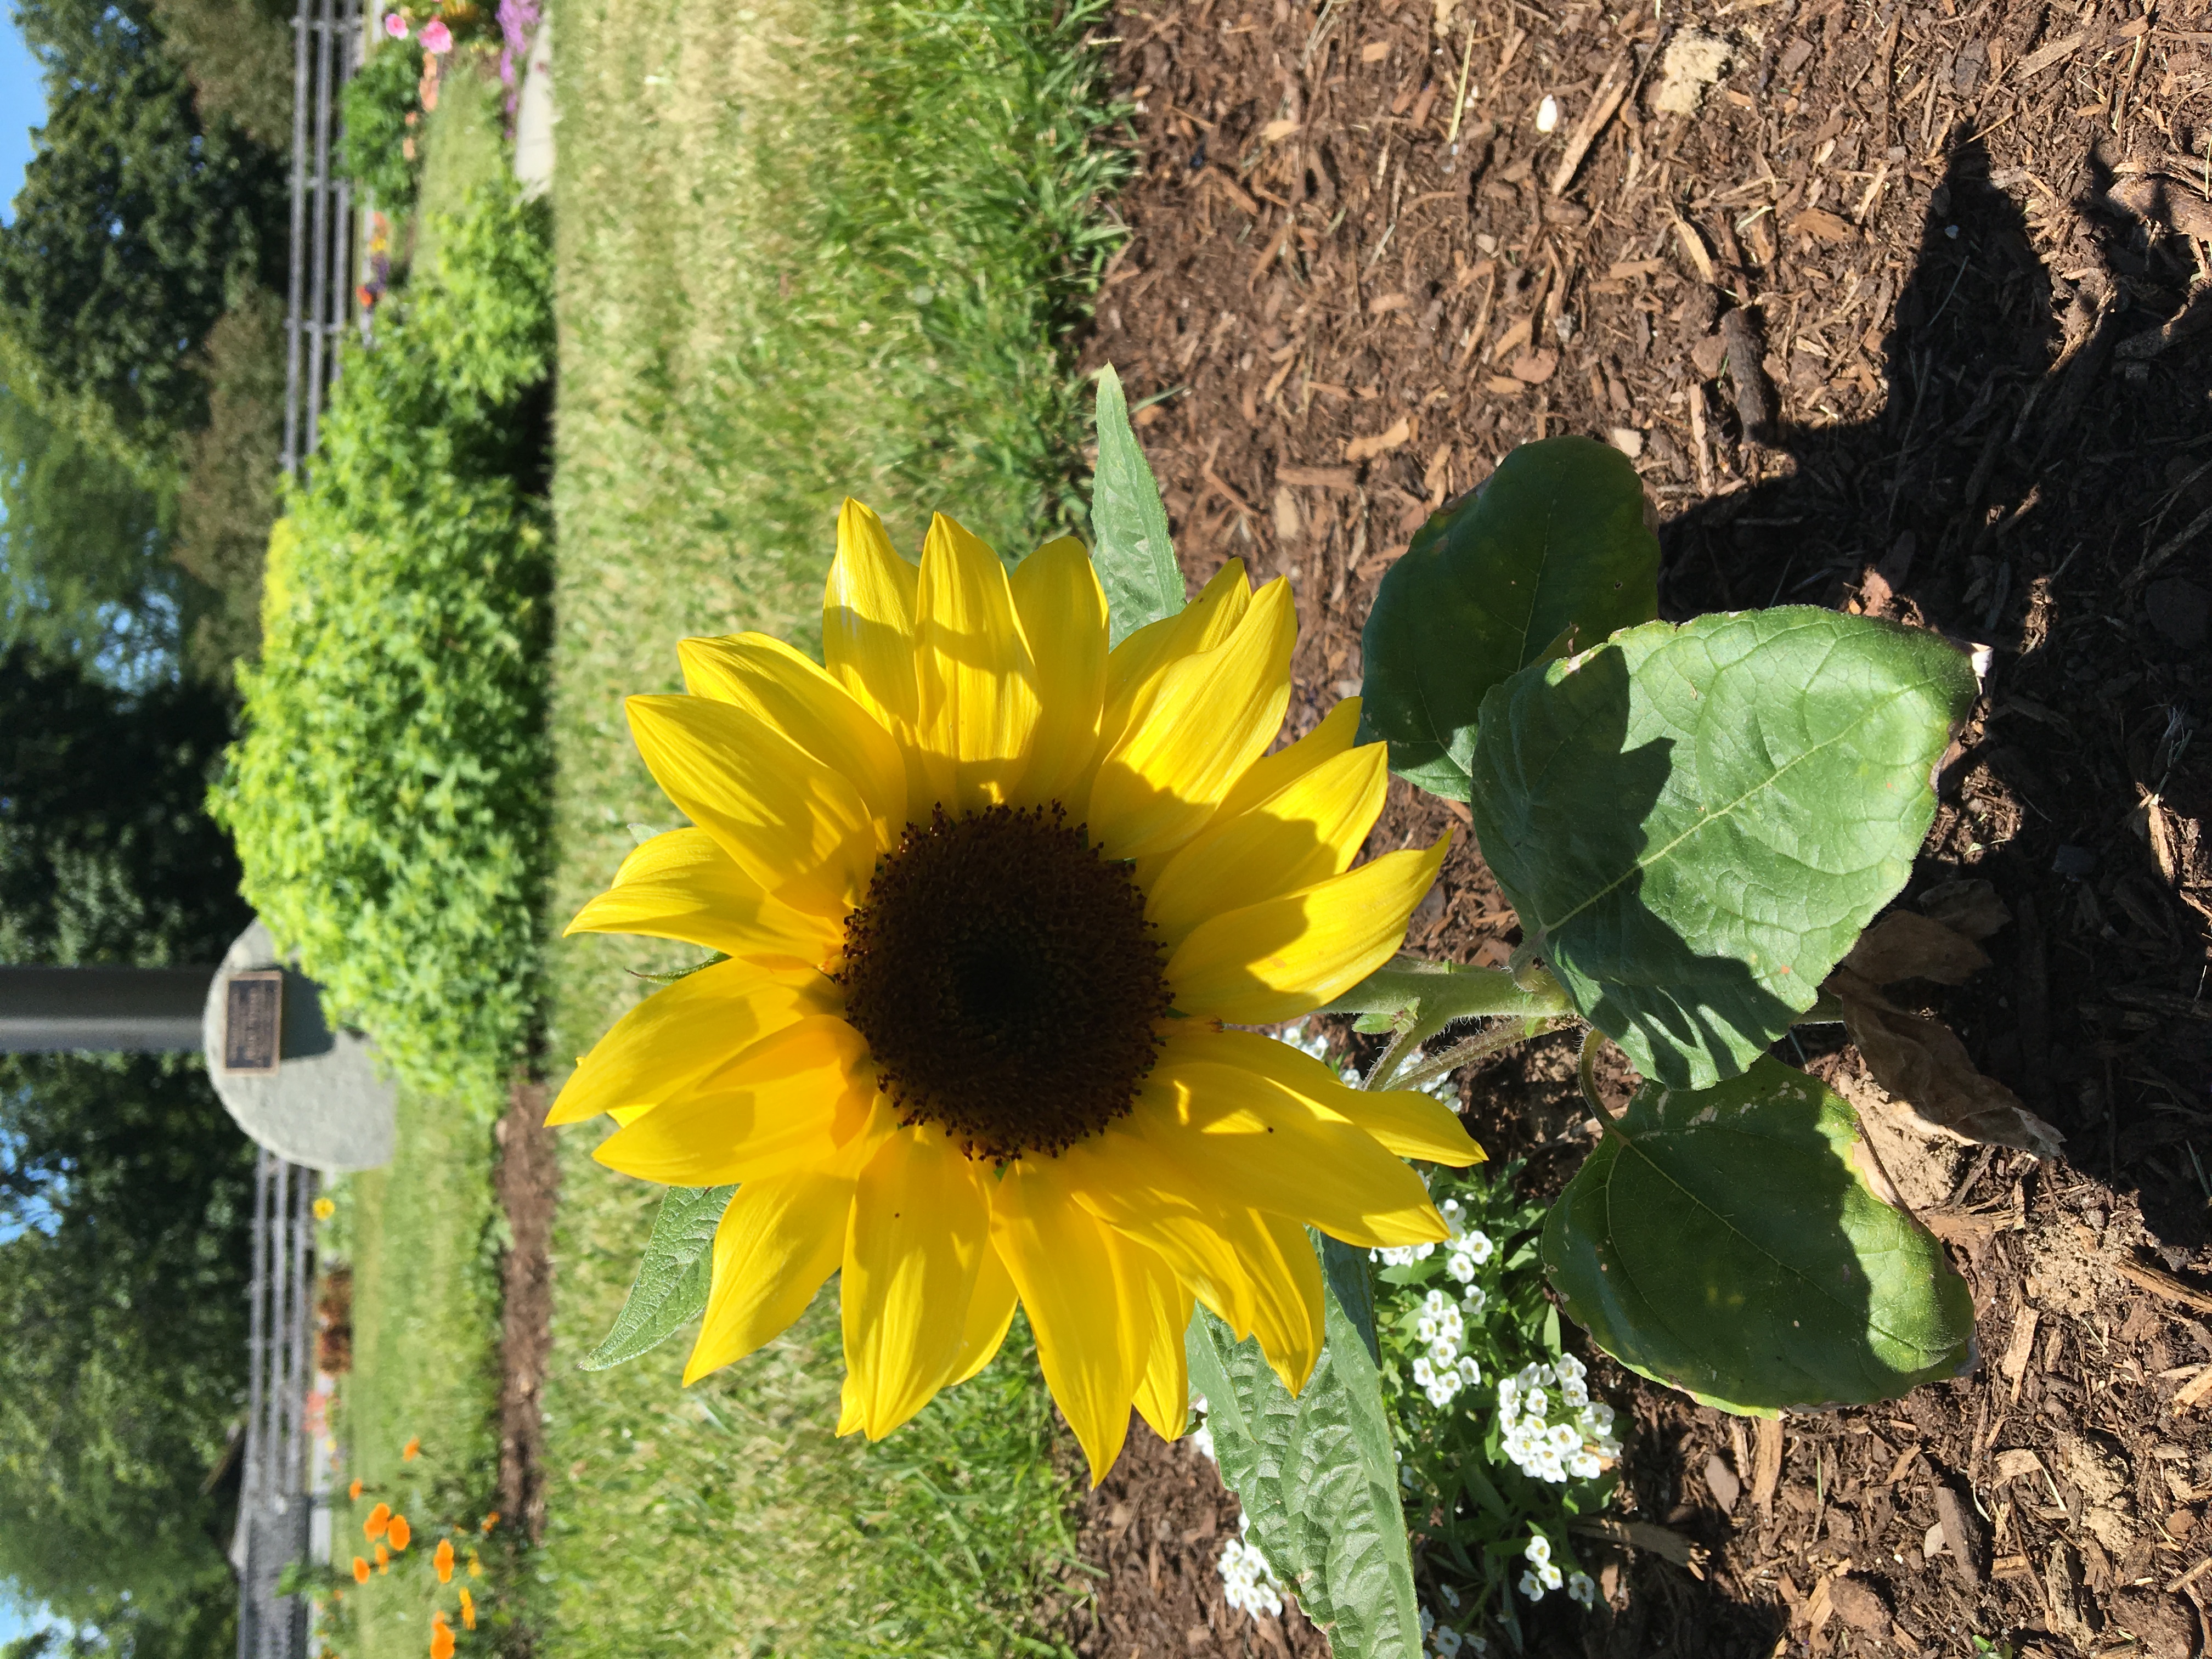 kidsgardening growing guides - sunflower growing guide